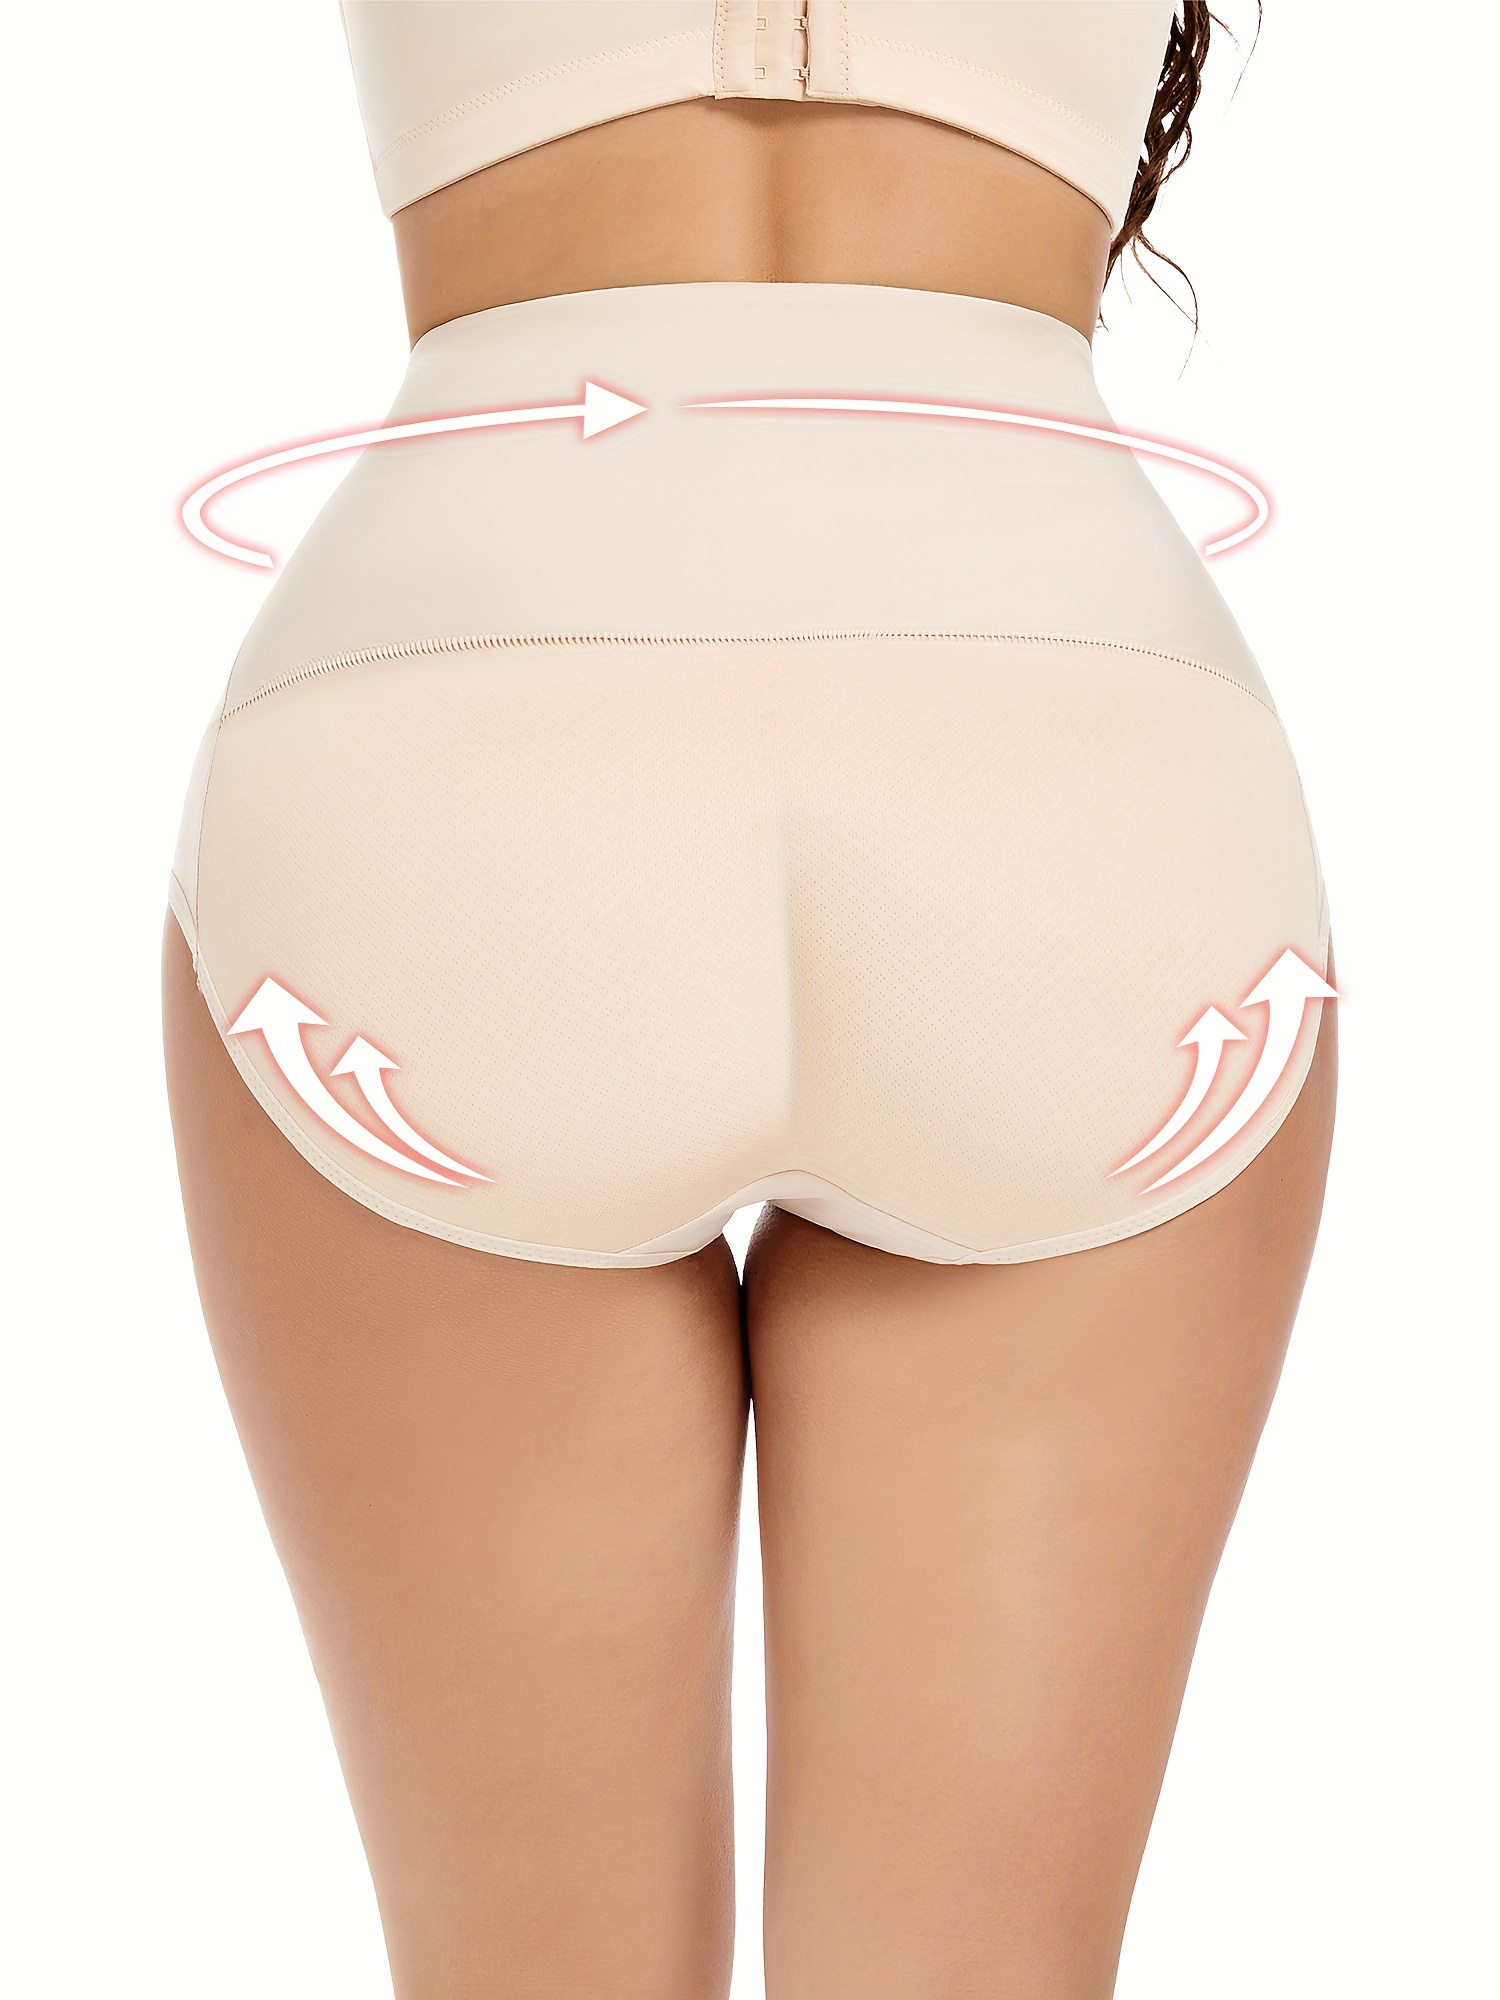 Shpwfbe Underwear Women Tummy Control Firm Tummy Support Shaping